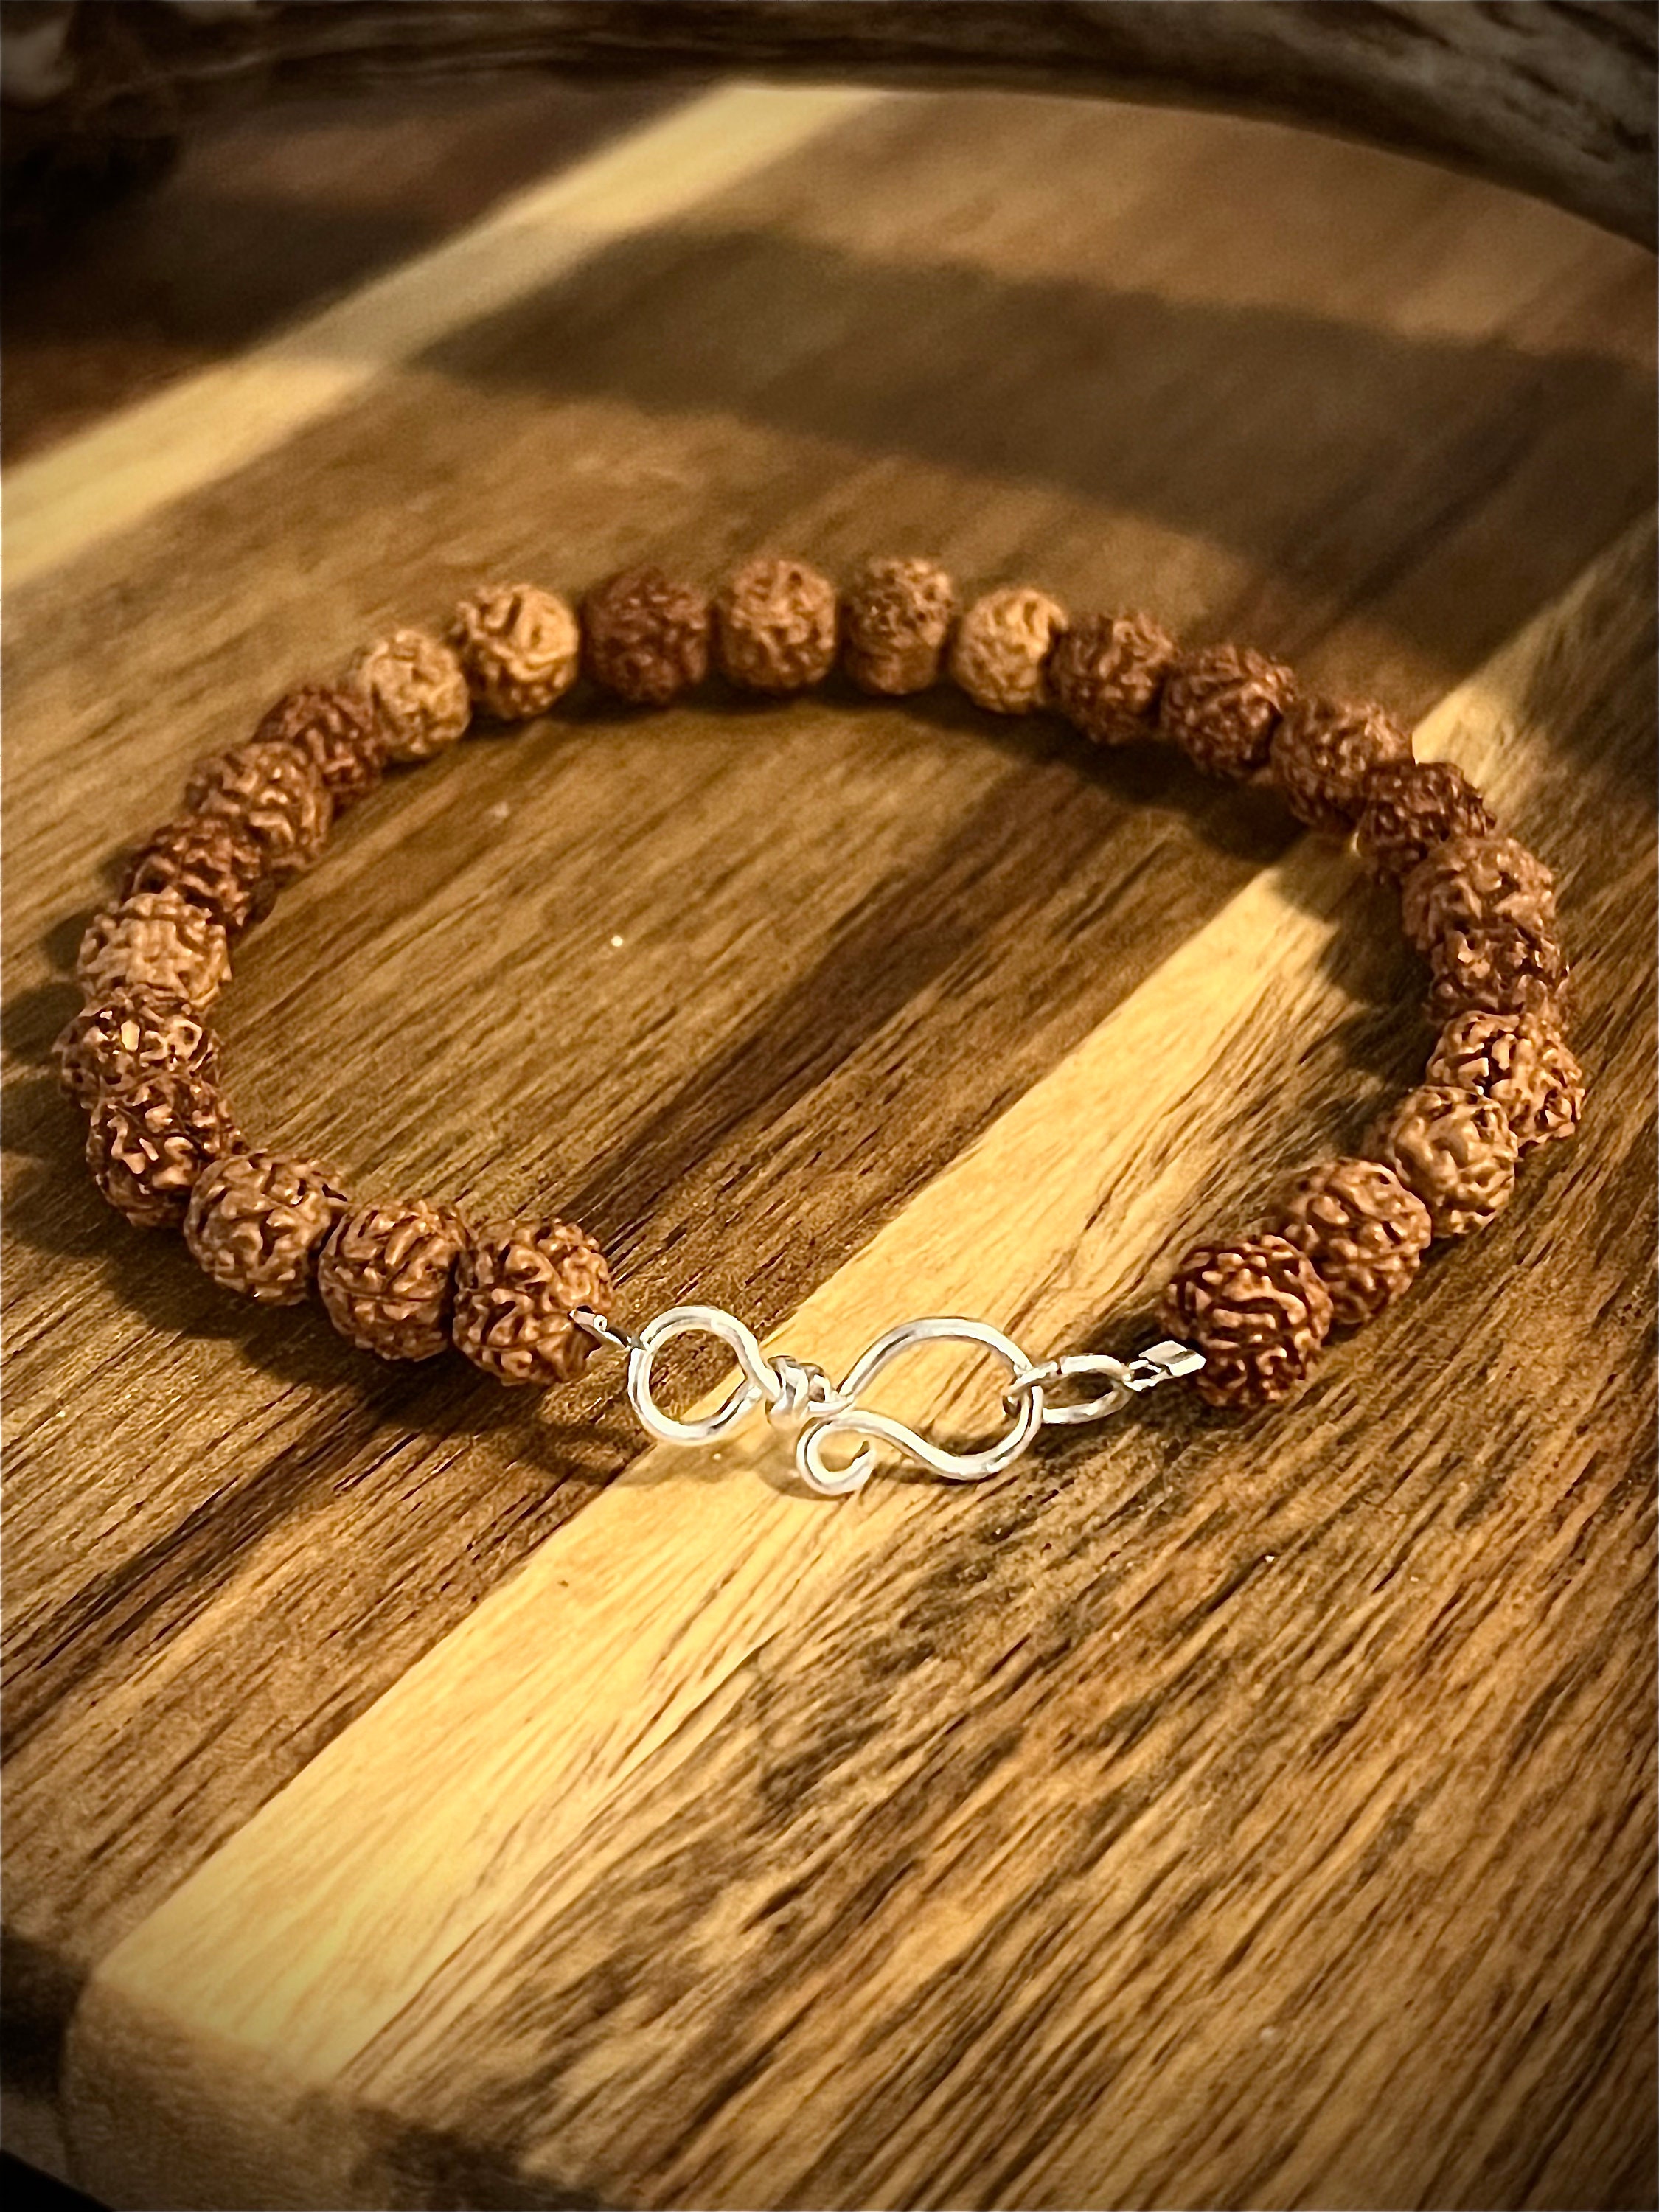 Bodhi Seed Meditation Bead Bracelet - Yellow String – Amadara